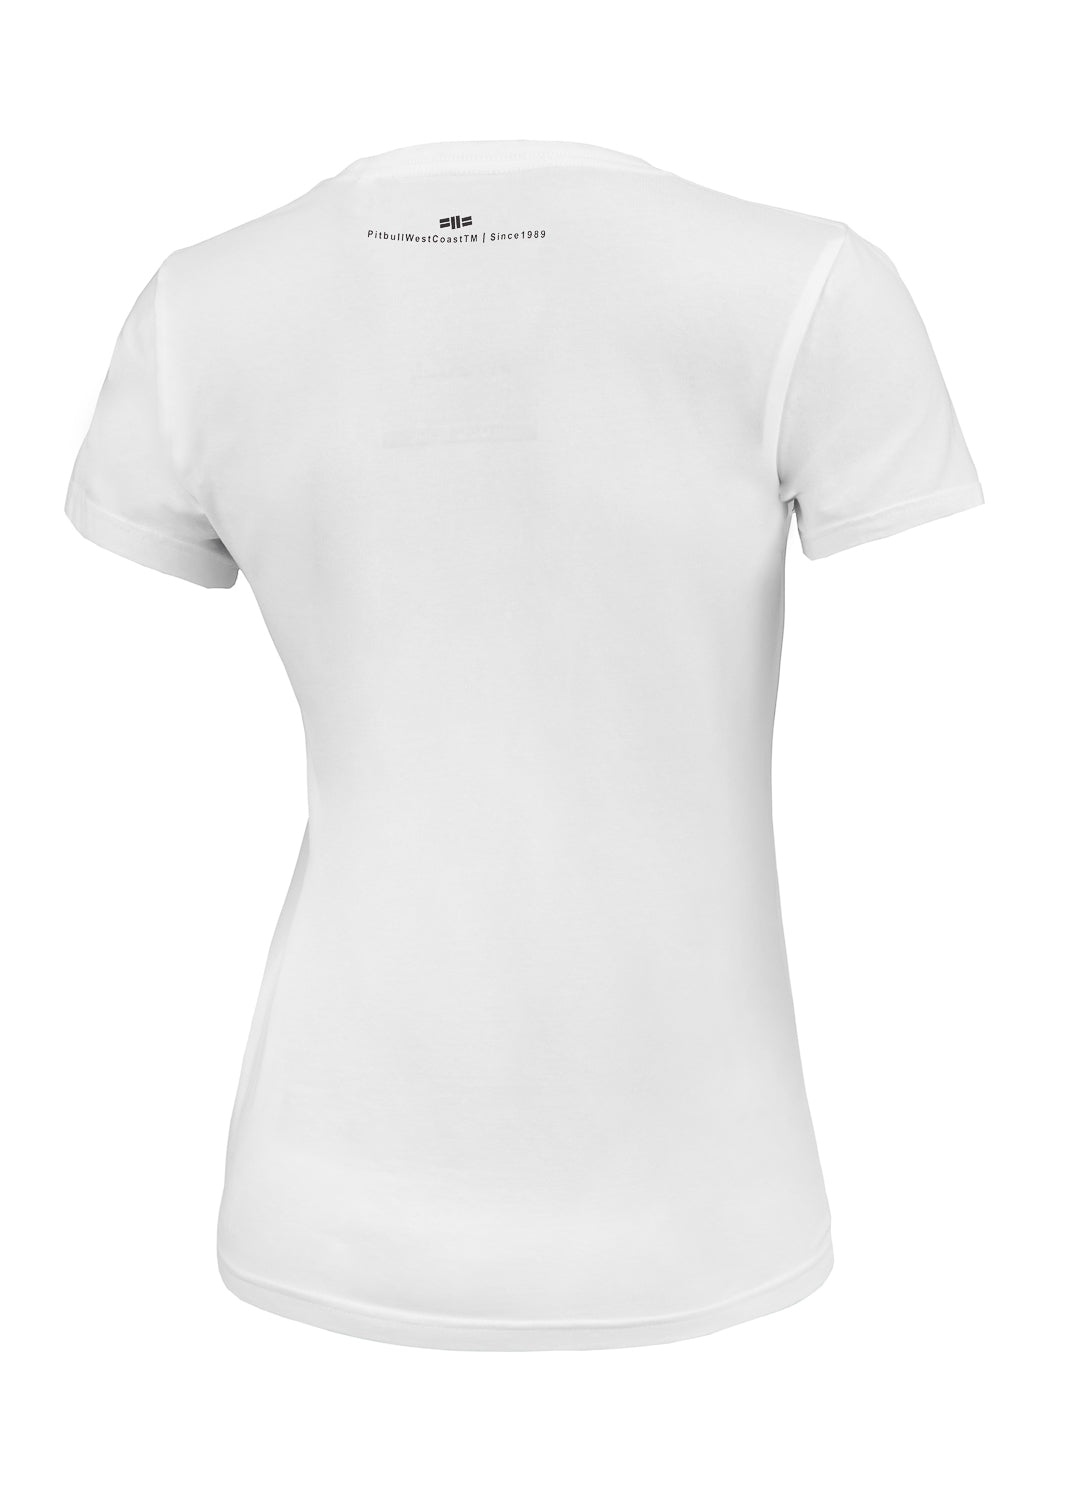 Women&#39;s T-shirt PB INSIDE White - Pitbull West Coast International Store 